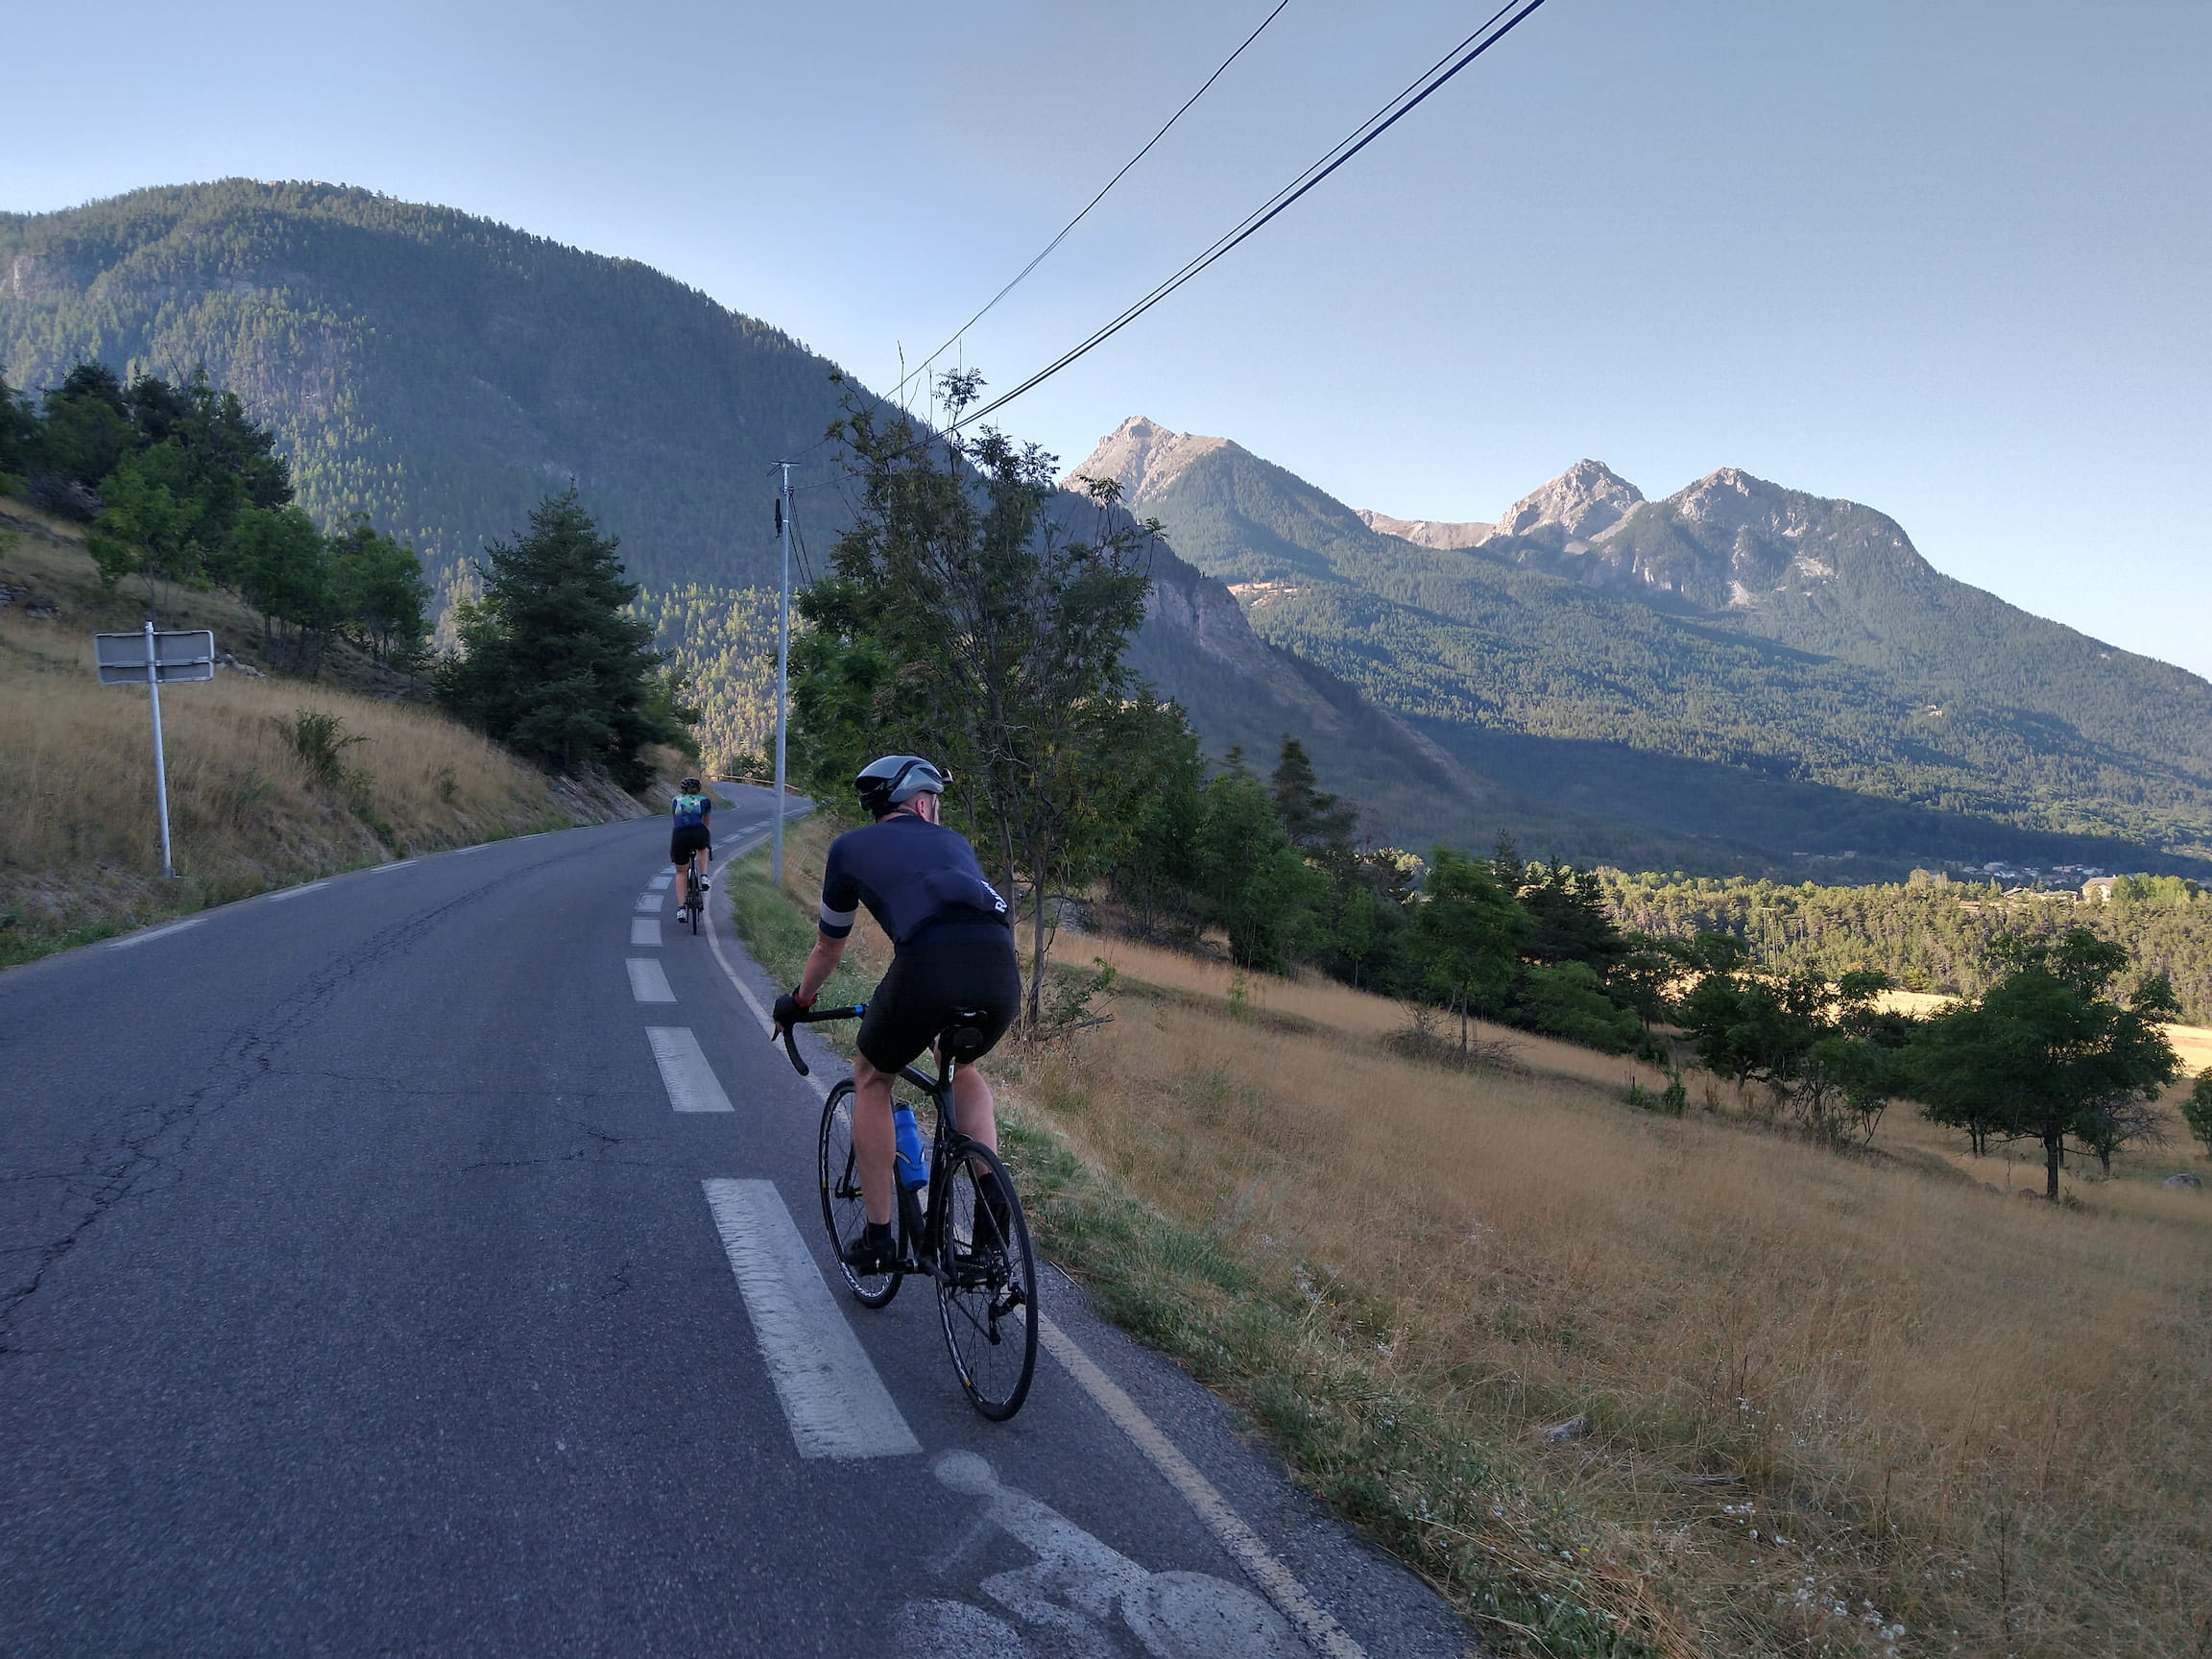 Climbing out of Briançon alongside fellow cyclist